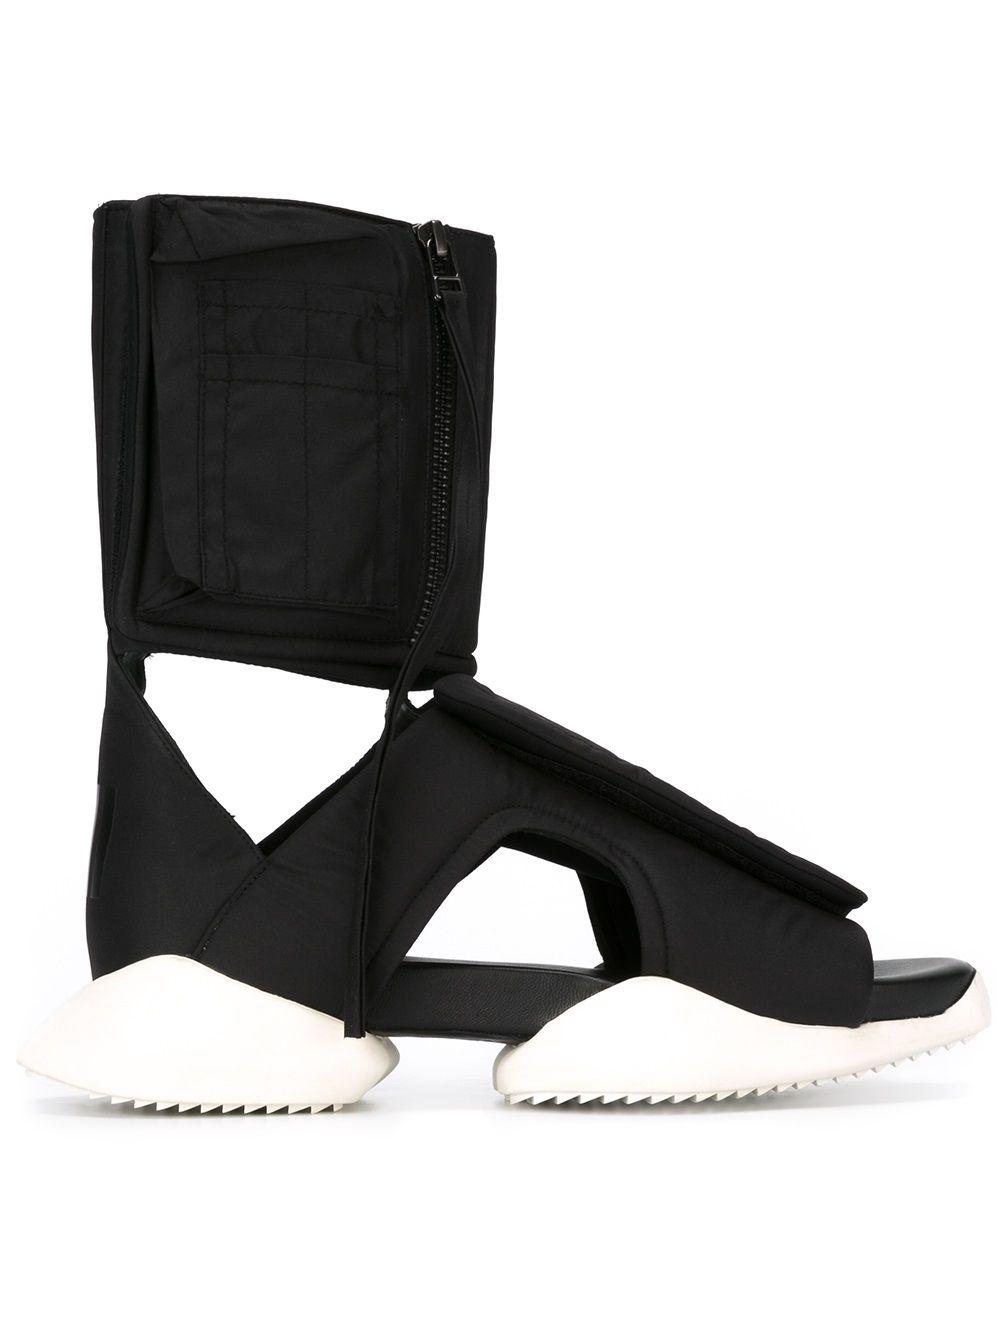 Lyst - Rick Owens X Adidas 'cargo' Sandals in Black for Men